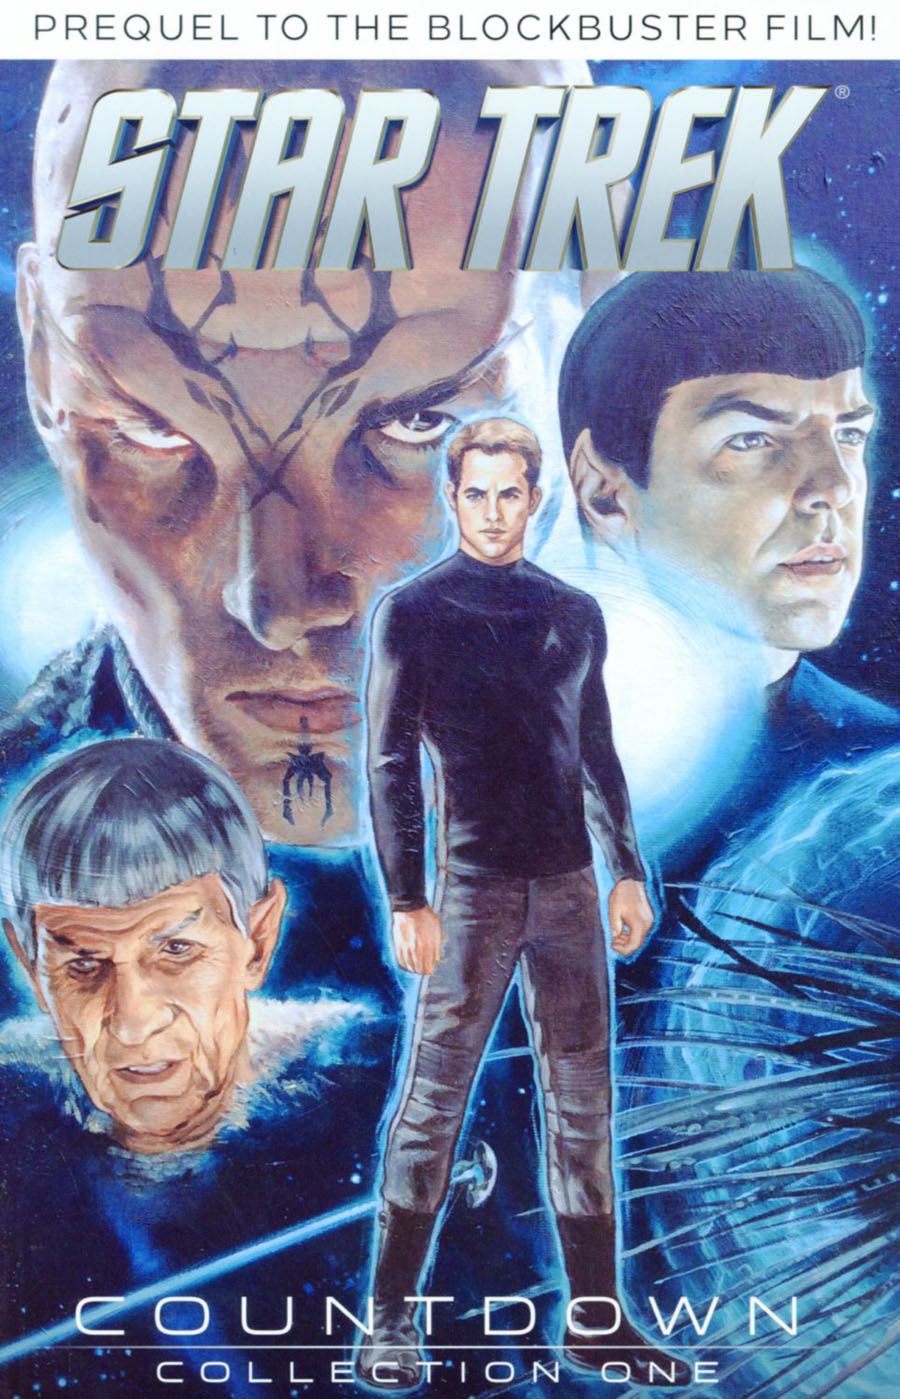 Star Trek Countdown Collection Vol 1 TP